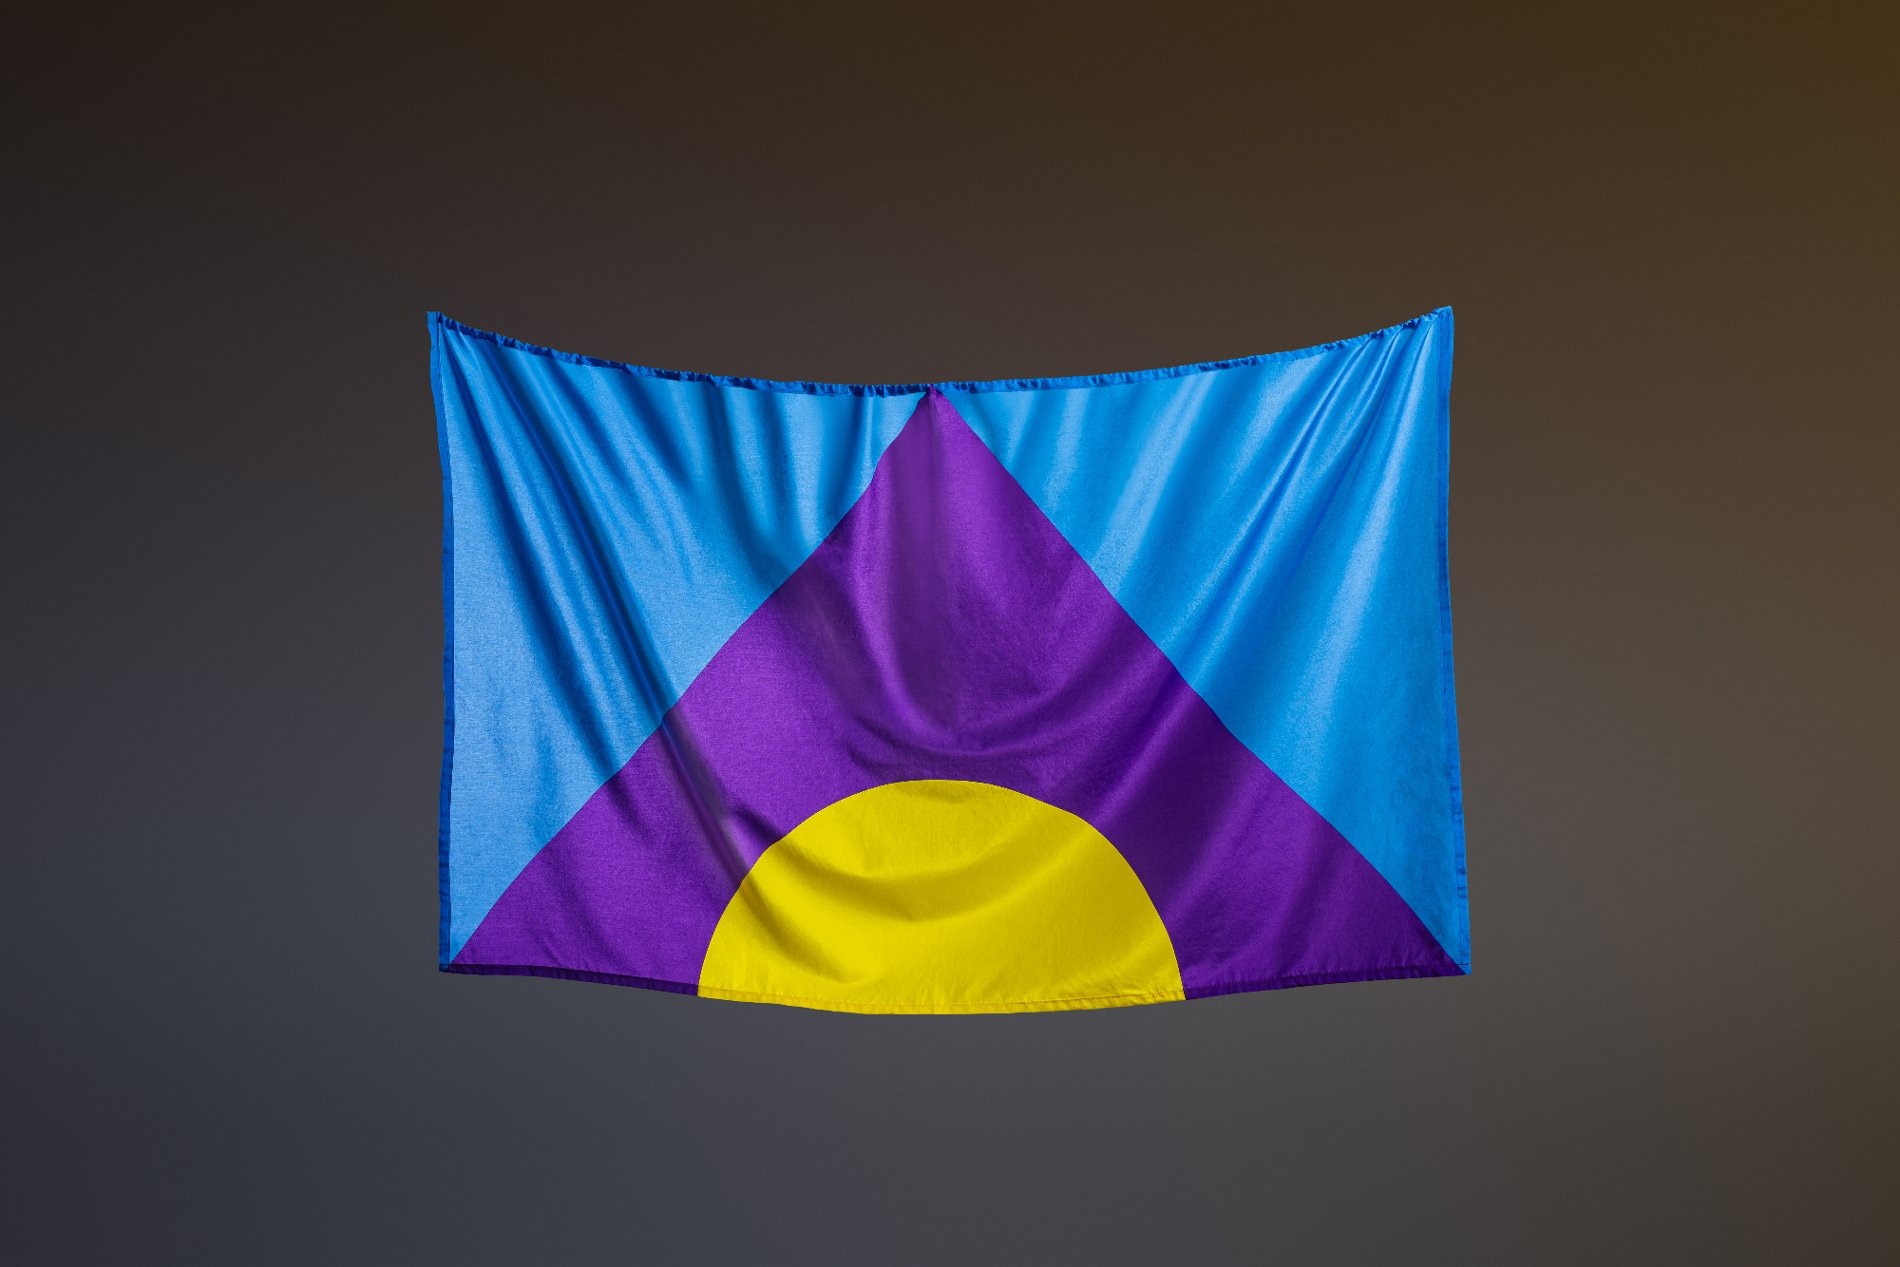 The flag Sanofi created for its meningitis campaign